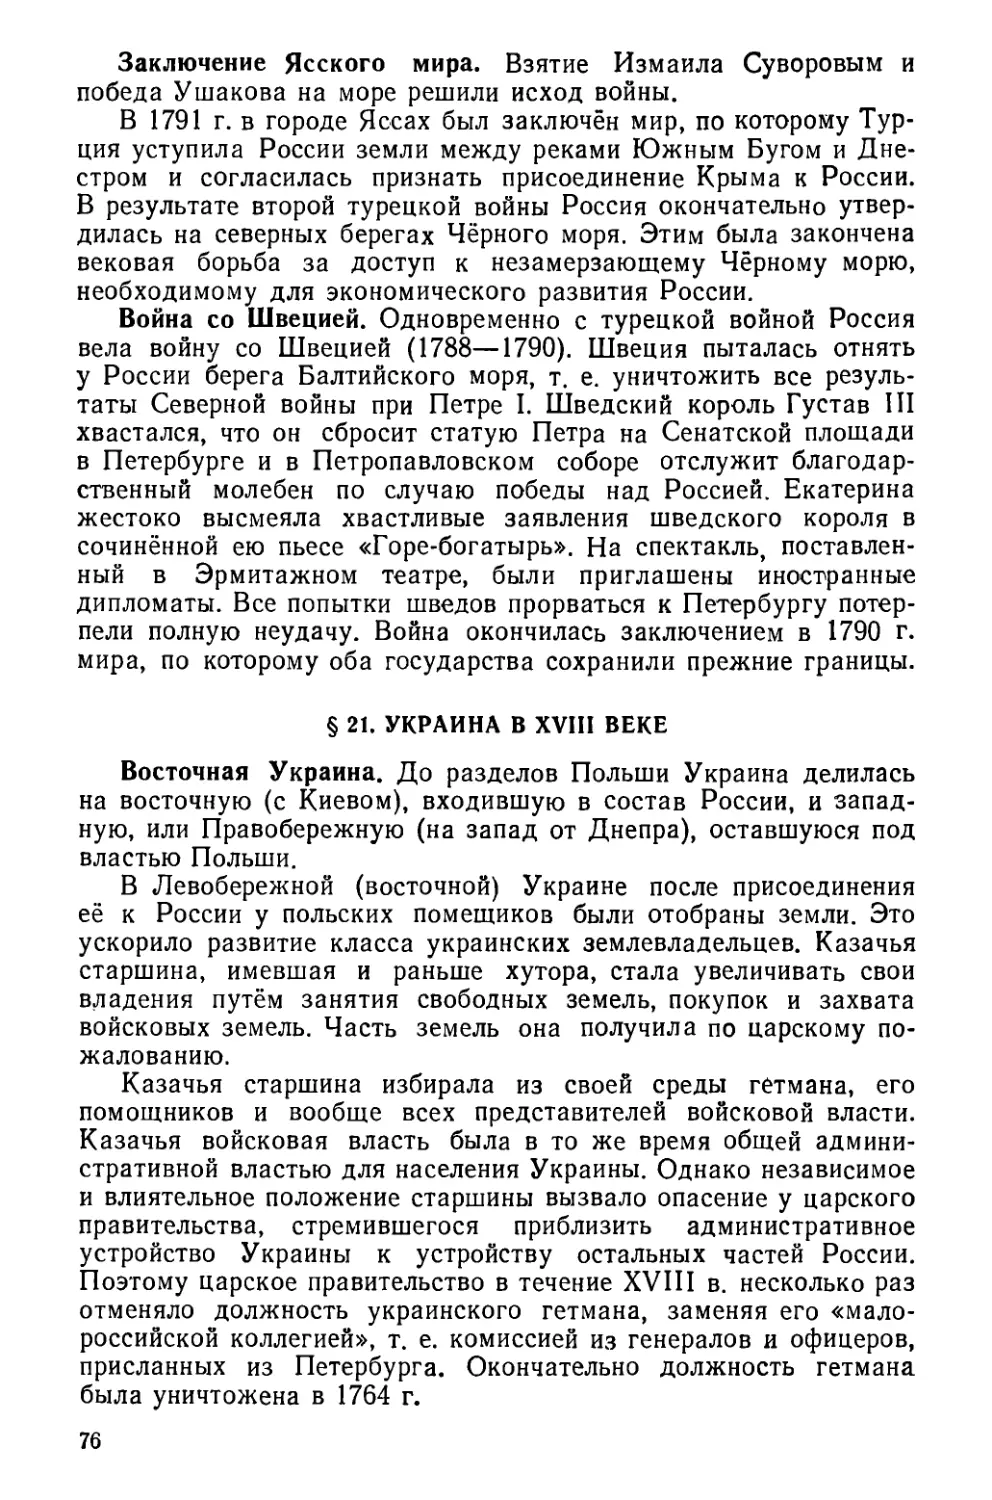 § 21. Украина в XVIII в.